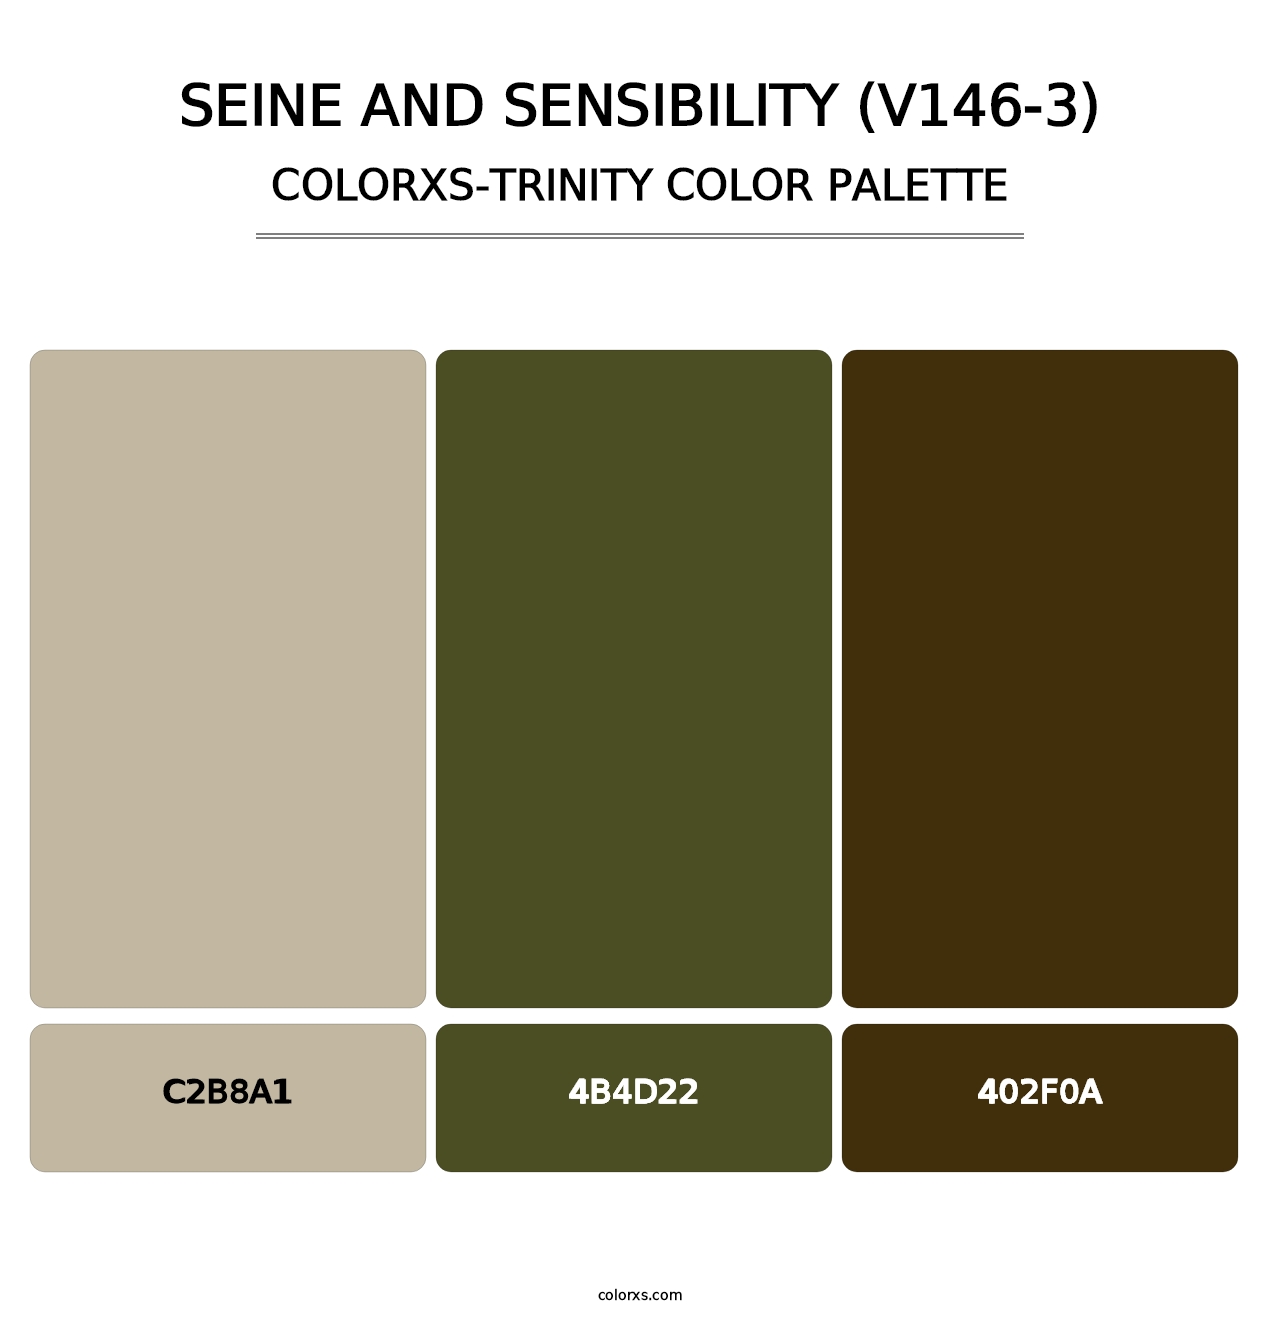 Seine and Sensibility (V146-3) - Colorxs Trinity Palette